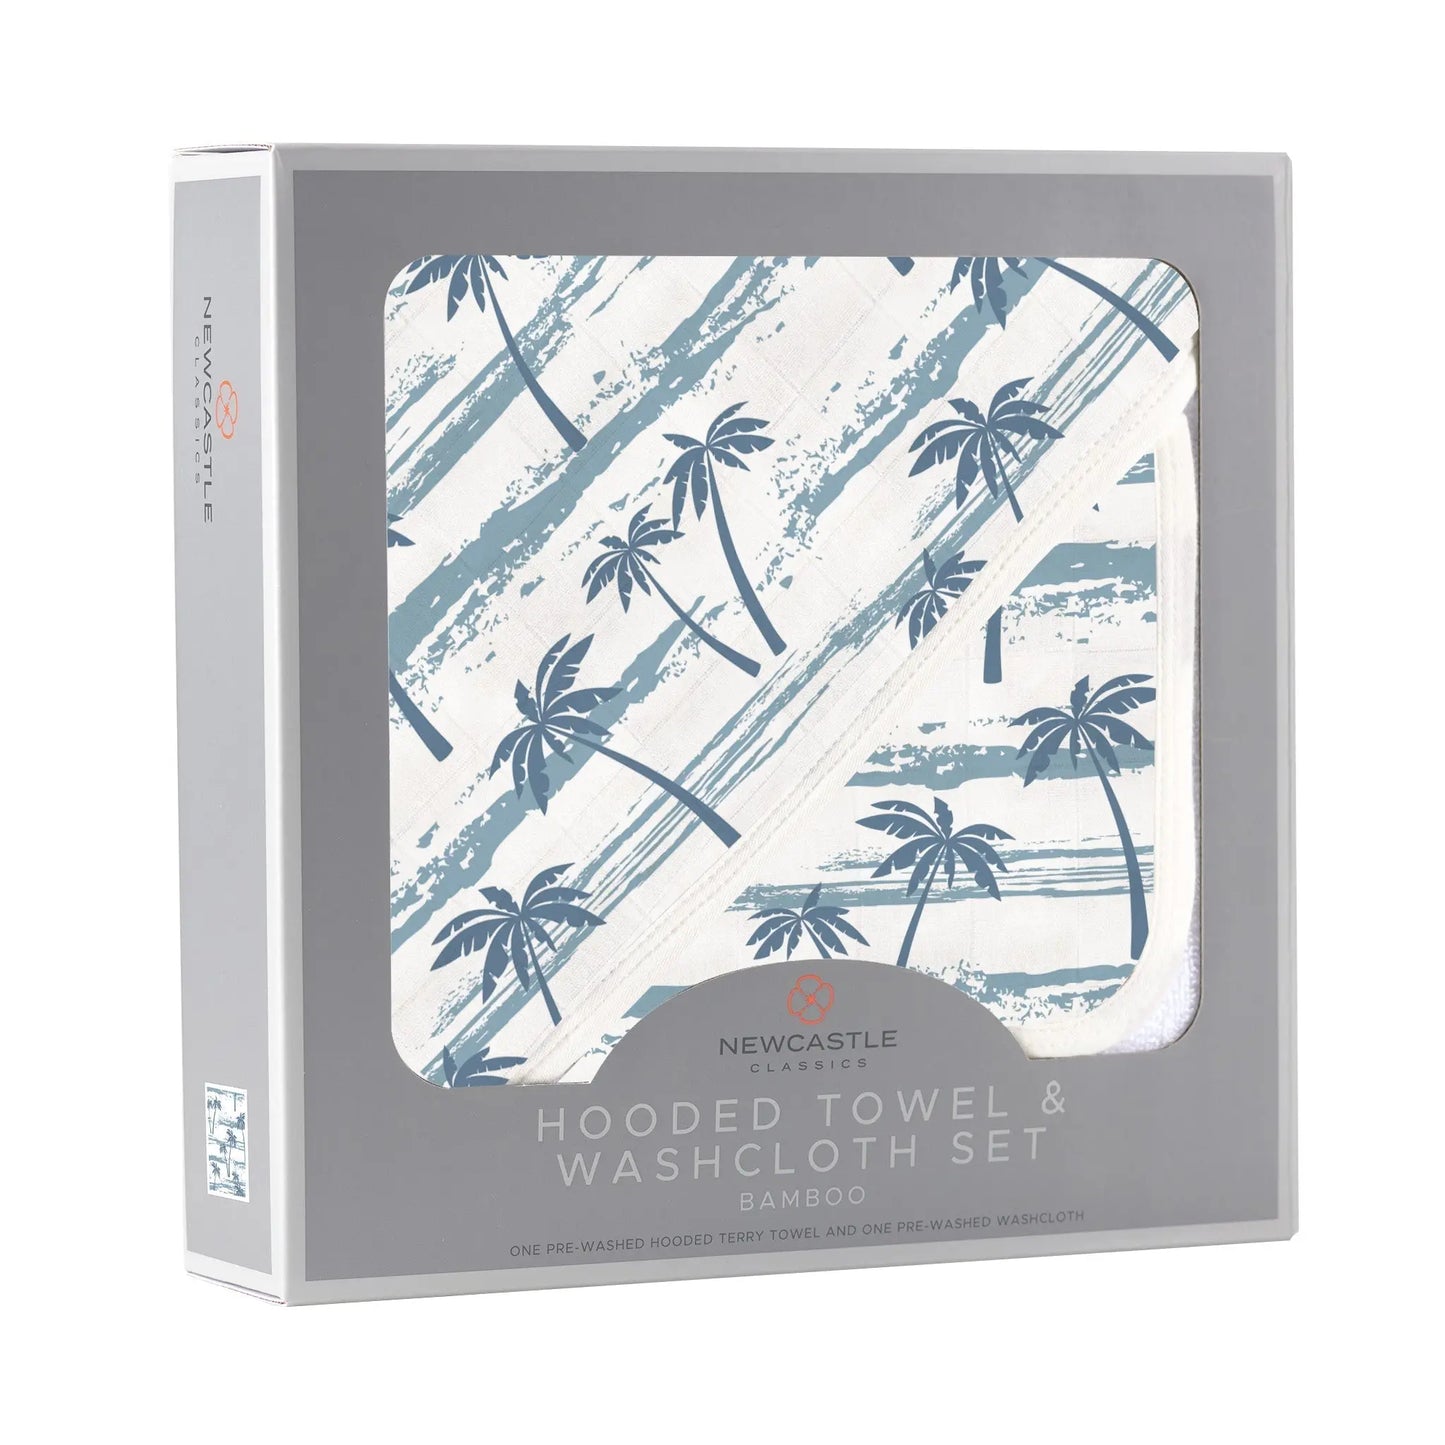 Hooded Towel & Washcloth Set | Bamboo Muslin - Ocean Palm Trees Newcastle Classics